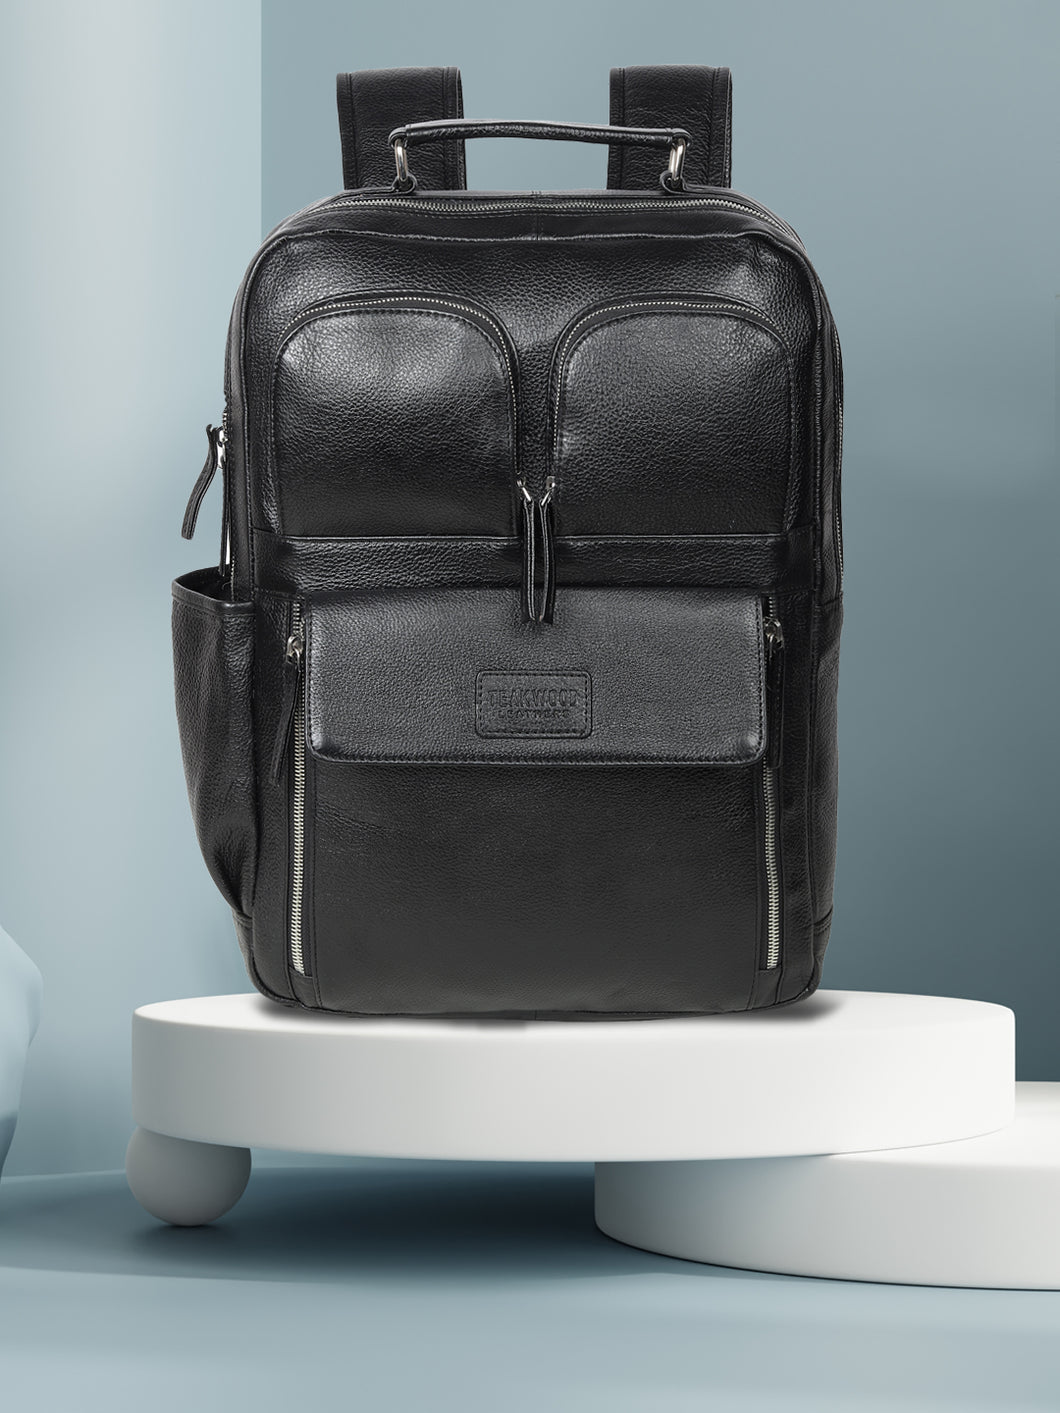 Teakwood Unisex Genuine Leather Black Solid Backpack||Unisex Laptop Bag/Backpack